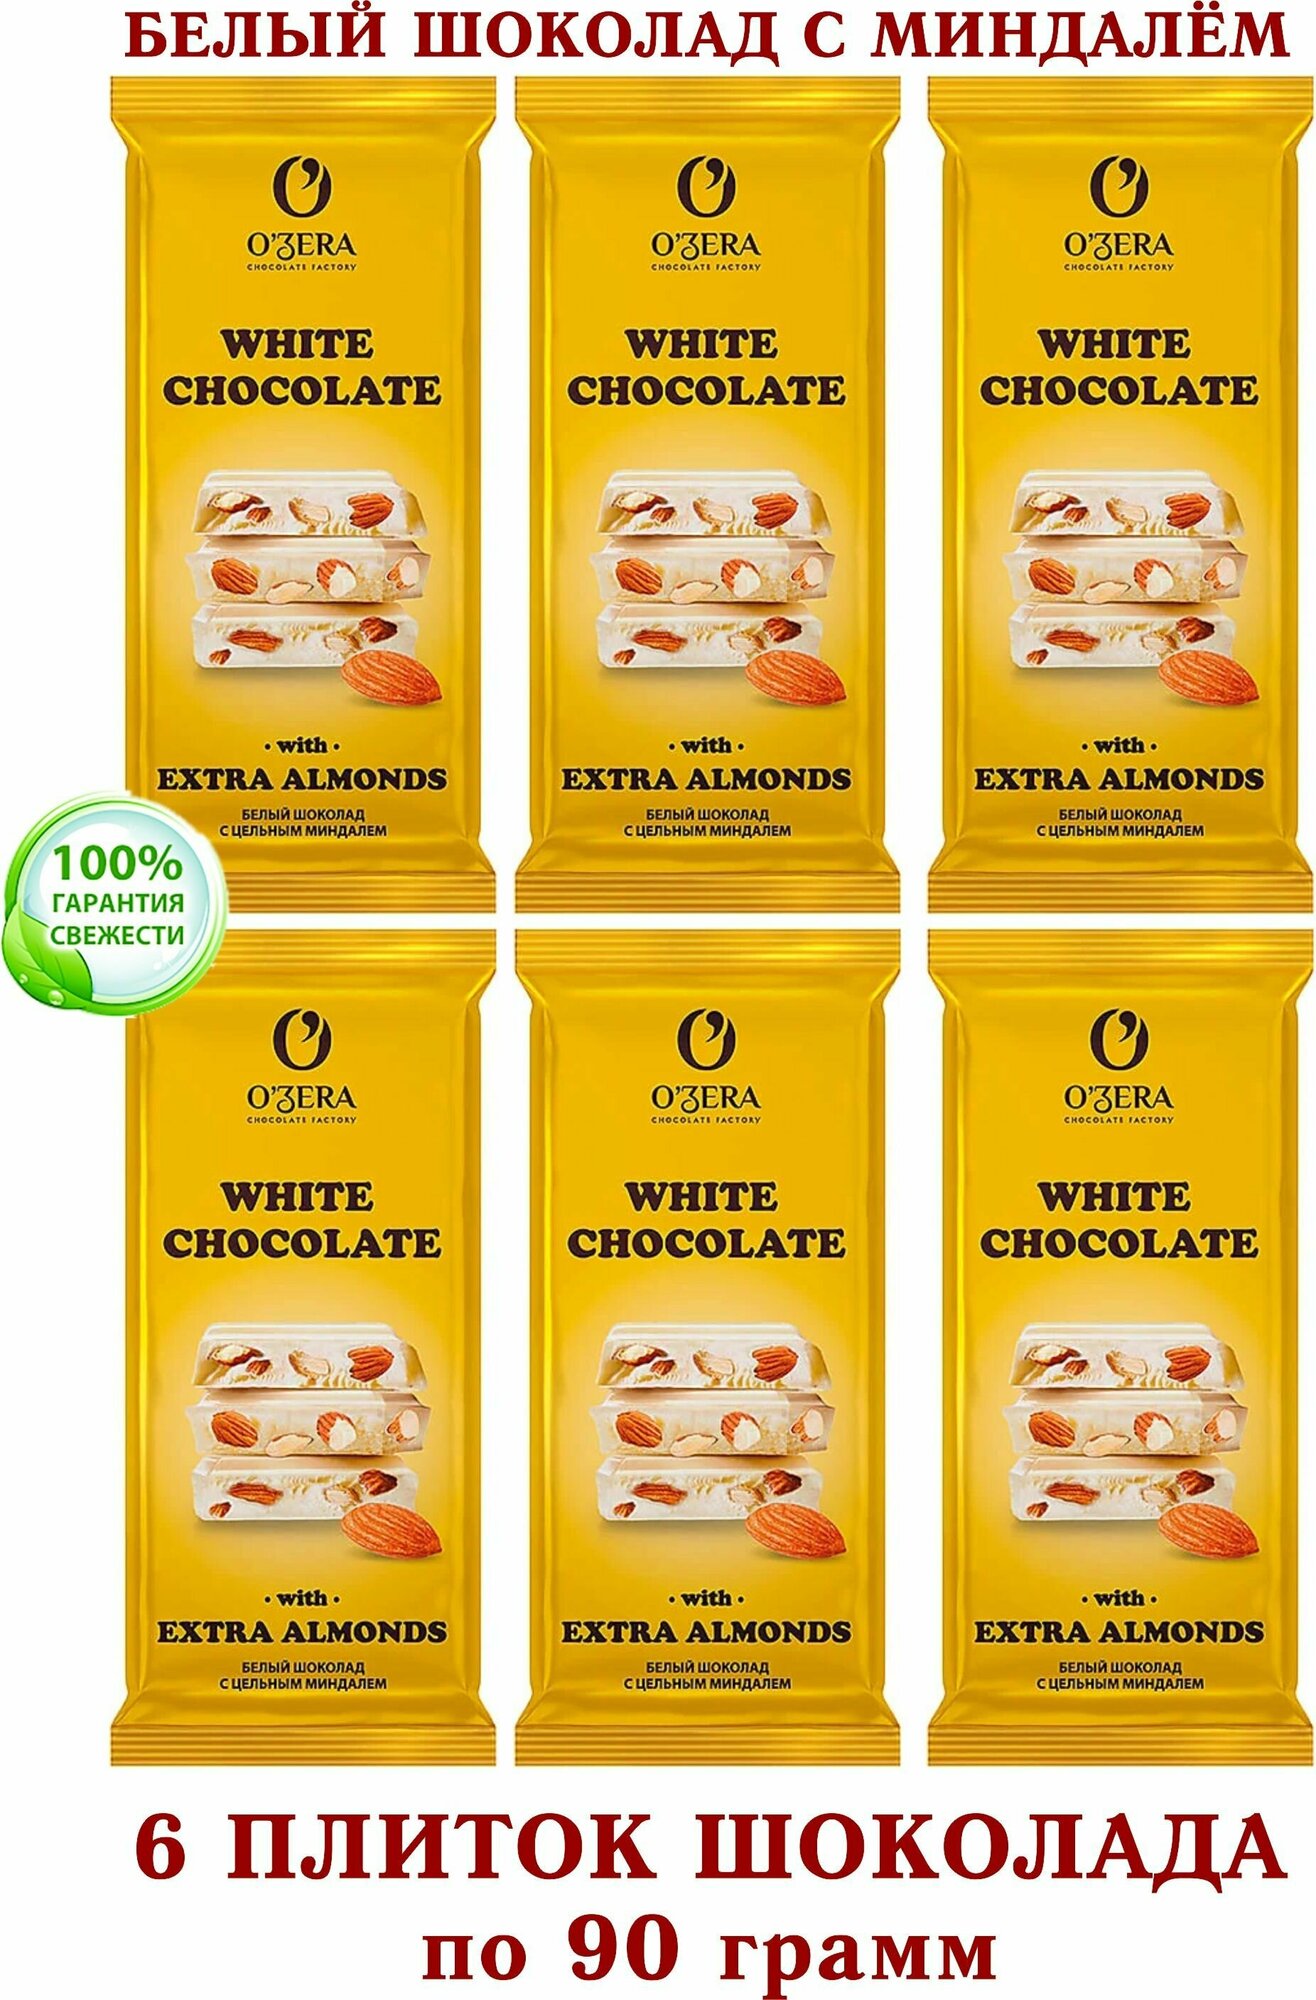 Шоколад OZera белый с цельным миндалем-White and Extra Almond-"Озерский сувенир" 6 плиток по 90 грамм.